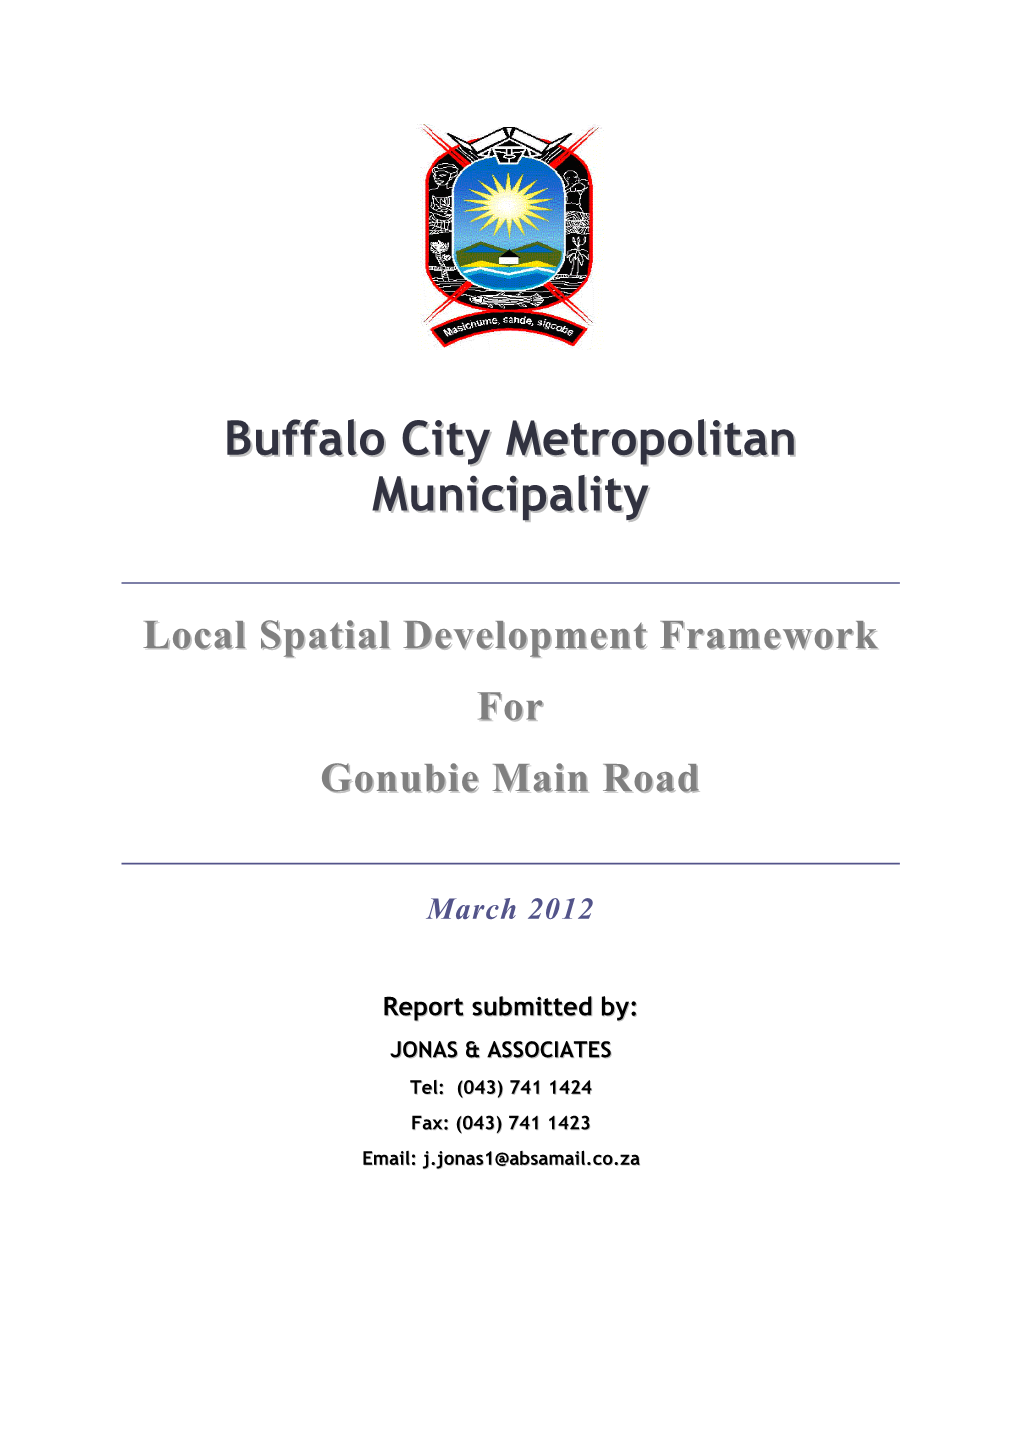 Gonubie Main Road Local Spatial Development Framework